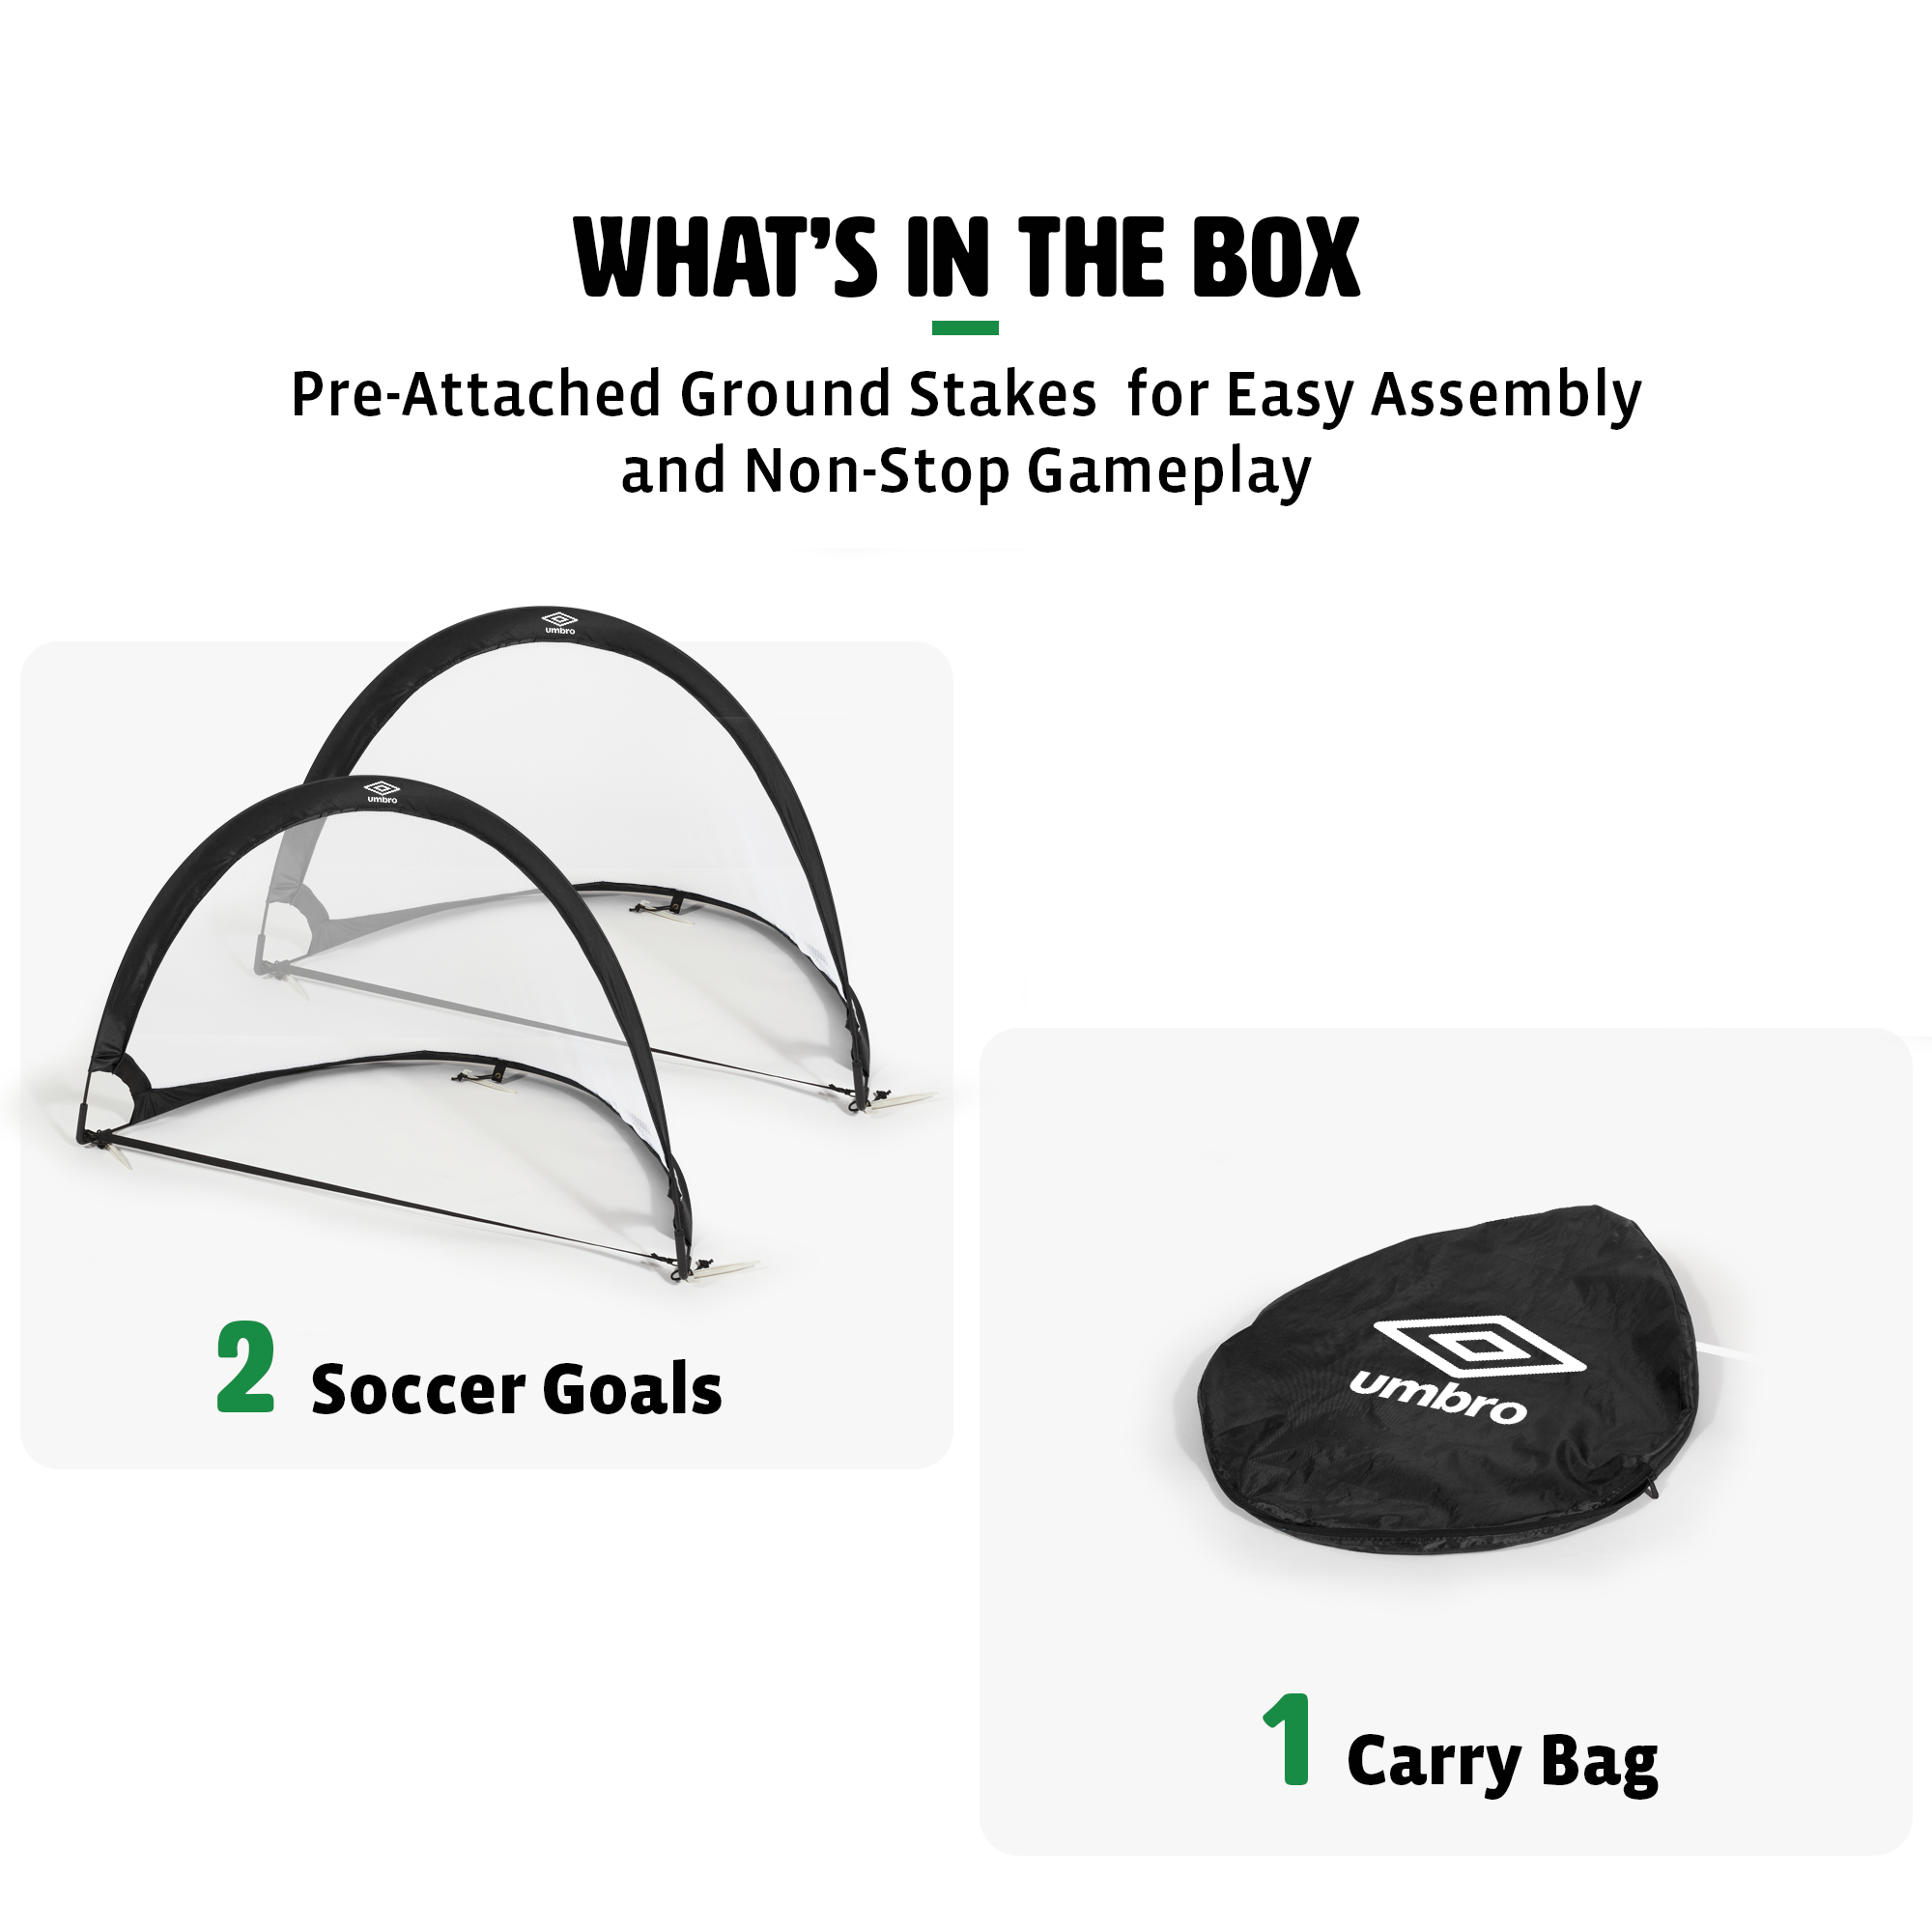 Umbro 3' x 2' Pop-up Soccer Goal Net Set - Portable 2 Goal Set with Carry Bag - image 2 of 5